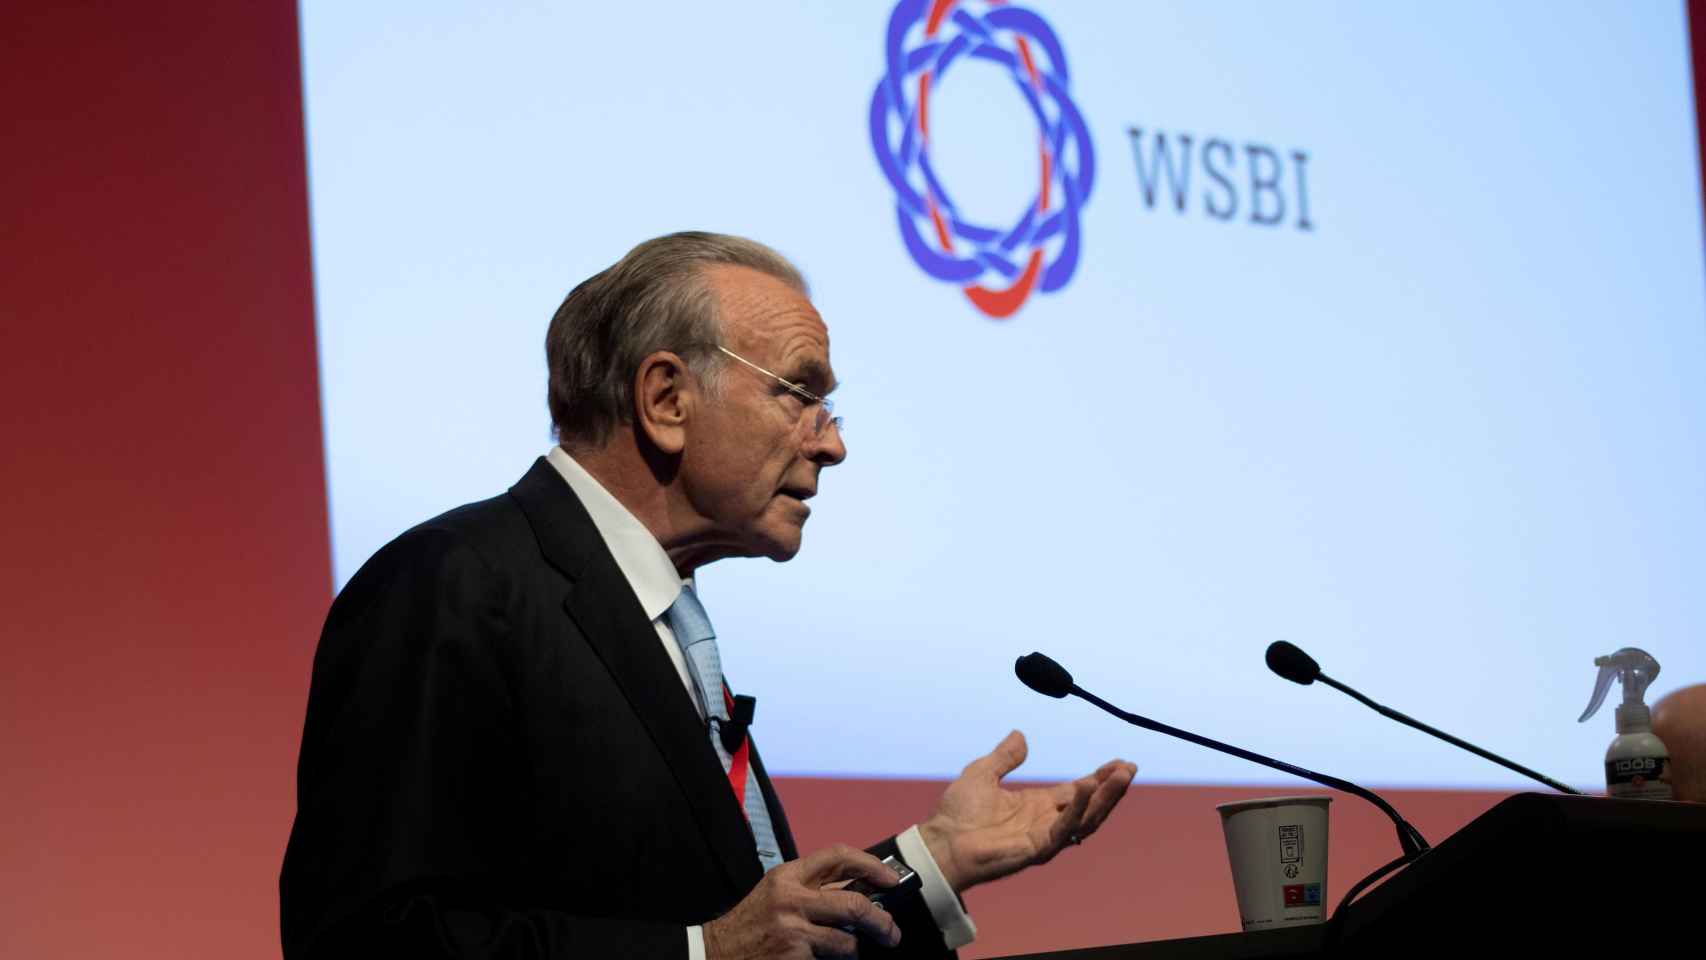 Isidro Fainé, durante su intervención en la Asamblea de WSBI posterior a su reelección como presidente